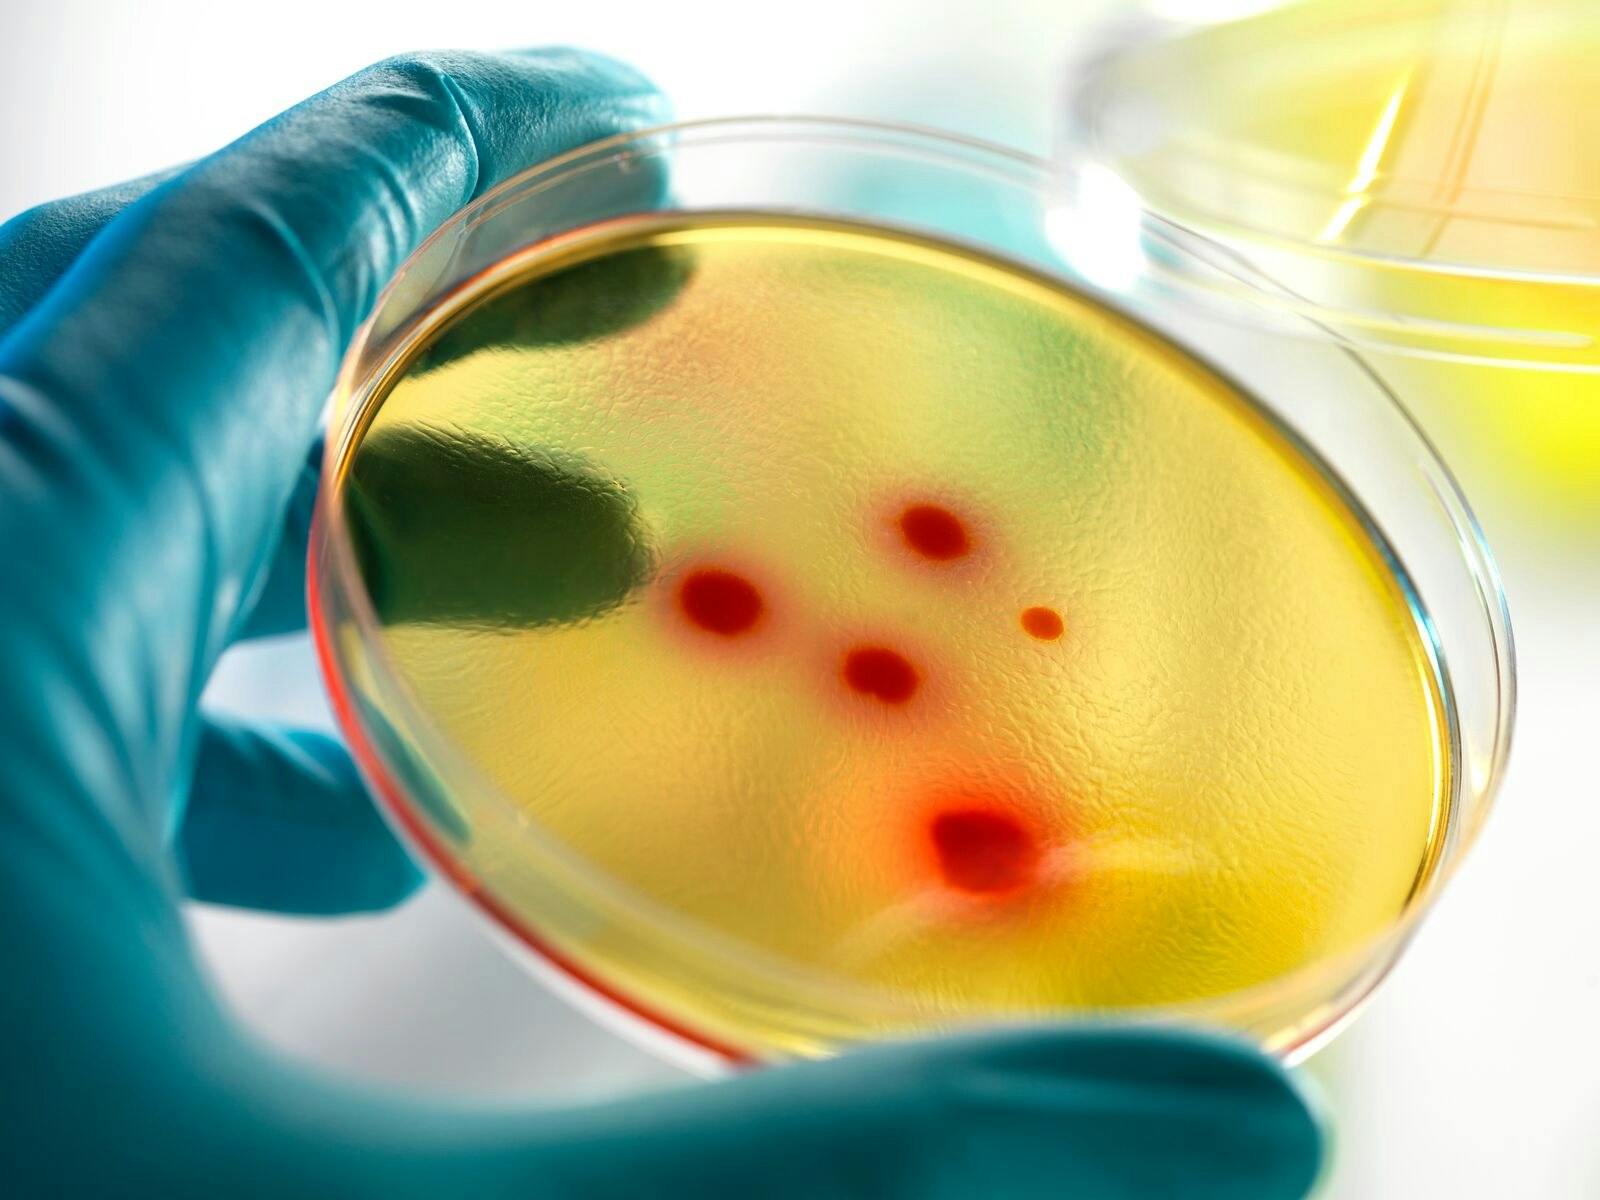 Petri Dish Containing Cultured Bacteria